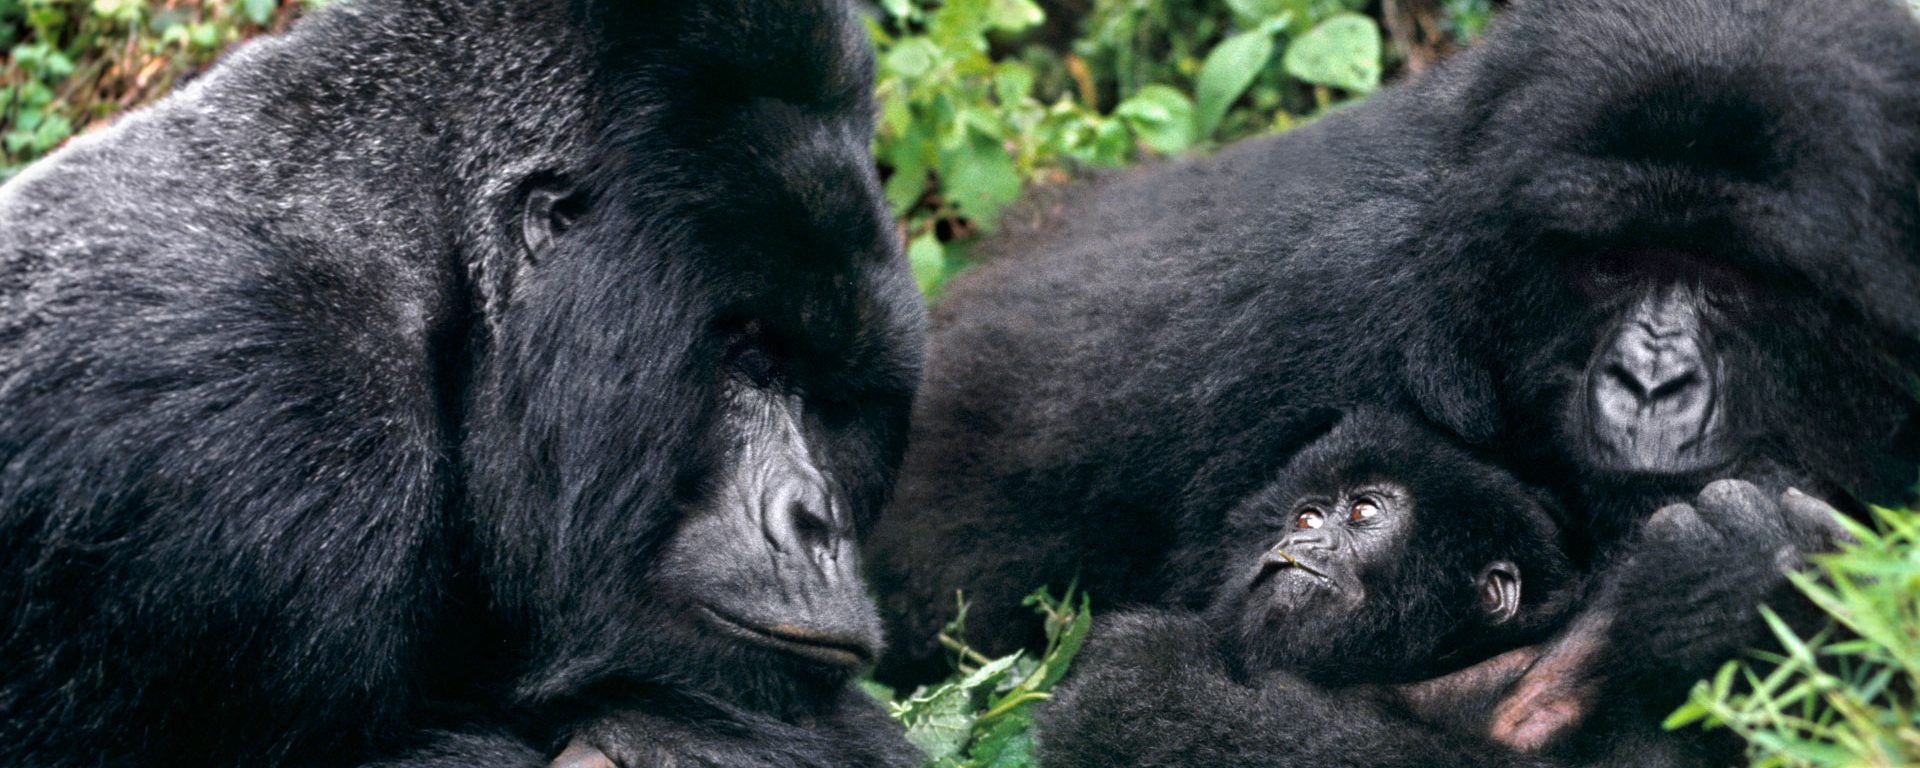 Uganda Gorilla Habituation Experience, Chimps & Monkeys Habituation, Lions Tracking Safari - 8 Days